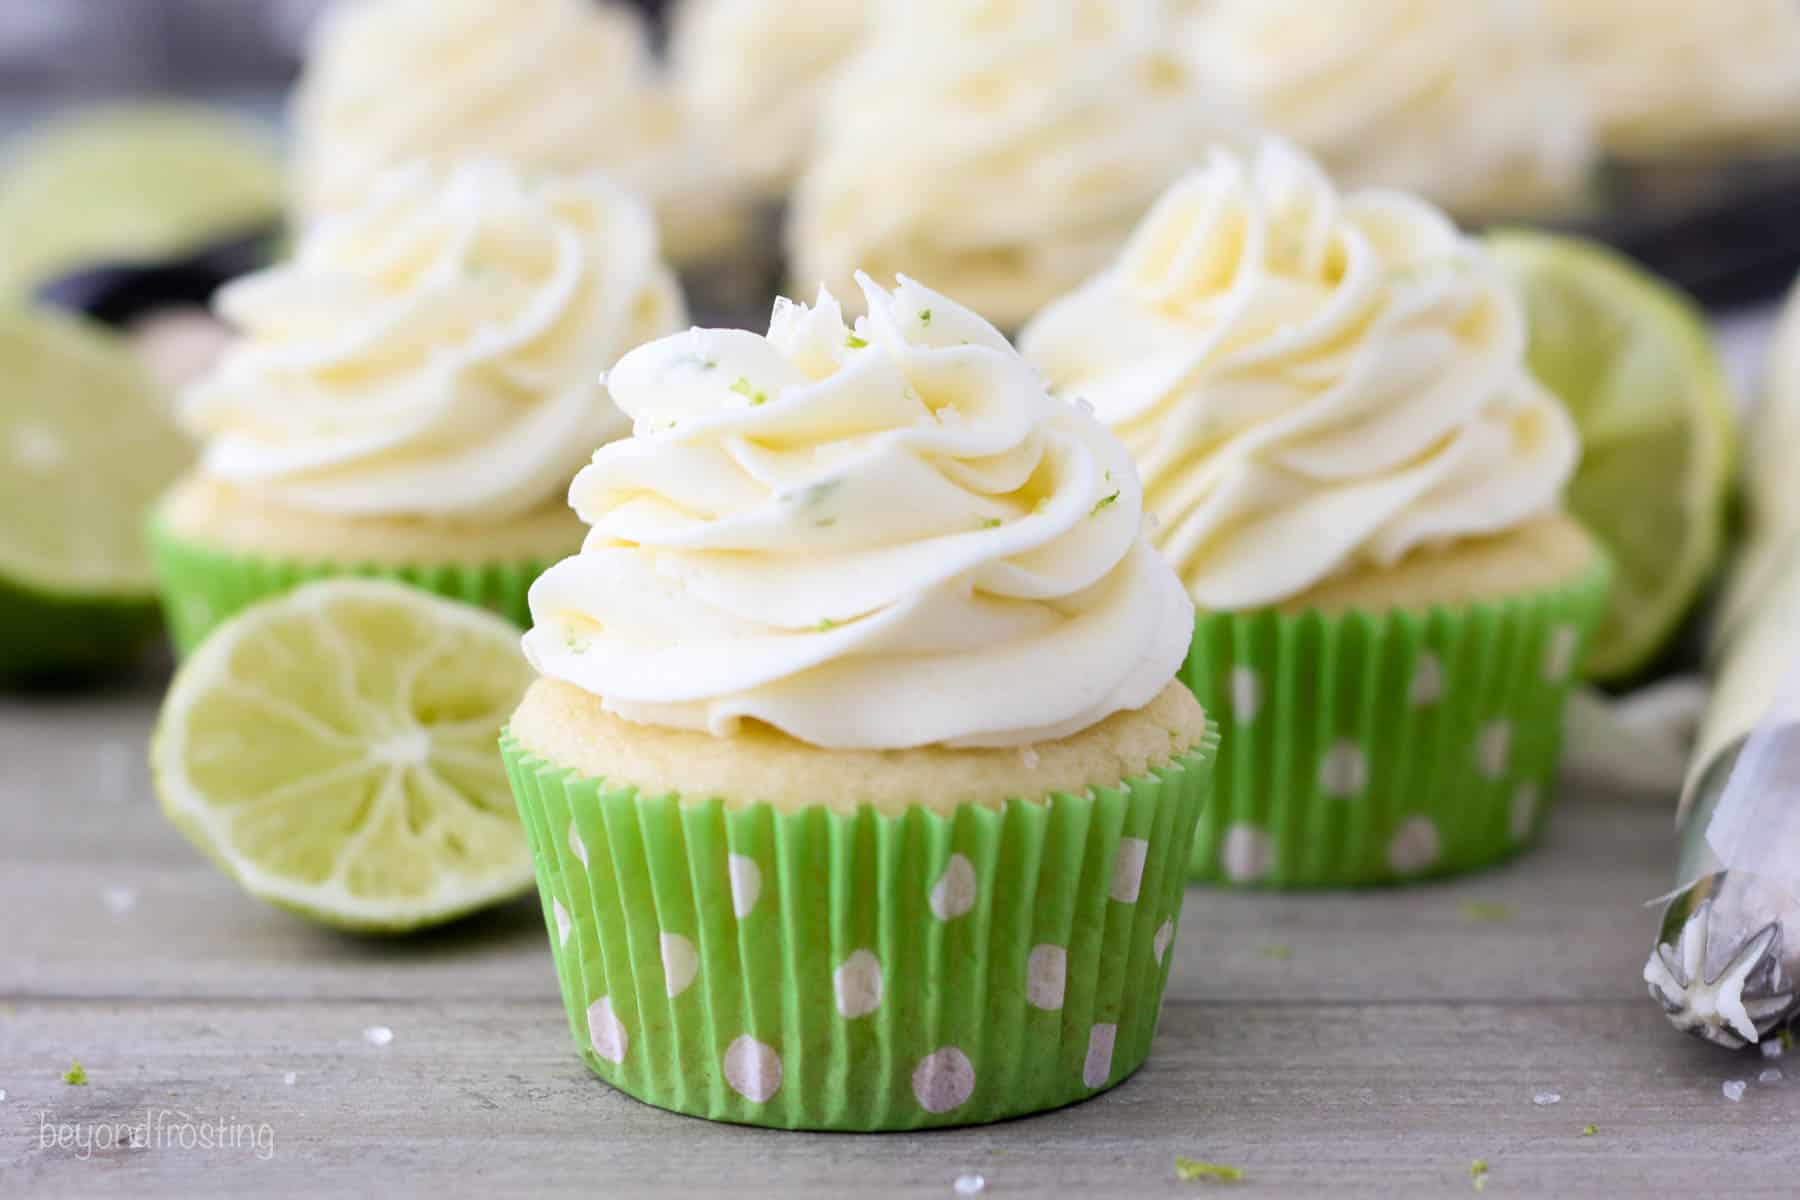 Three Margarita cupcakes in green polka dot cupcake liners